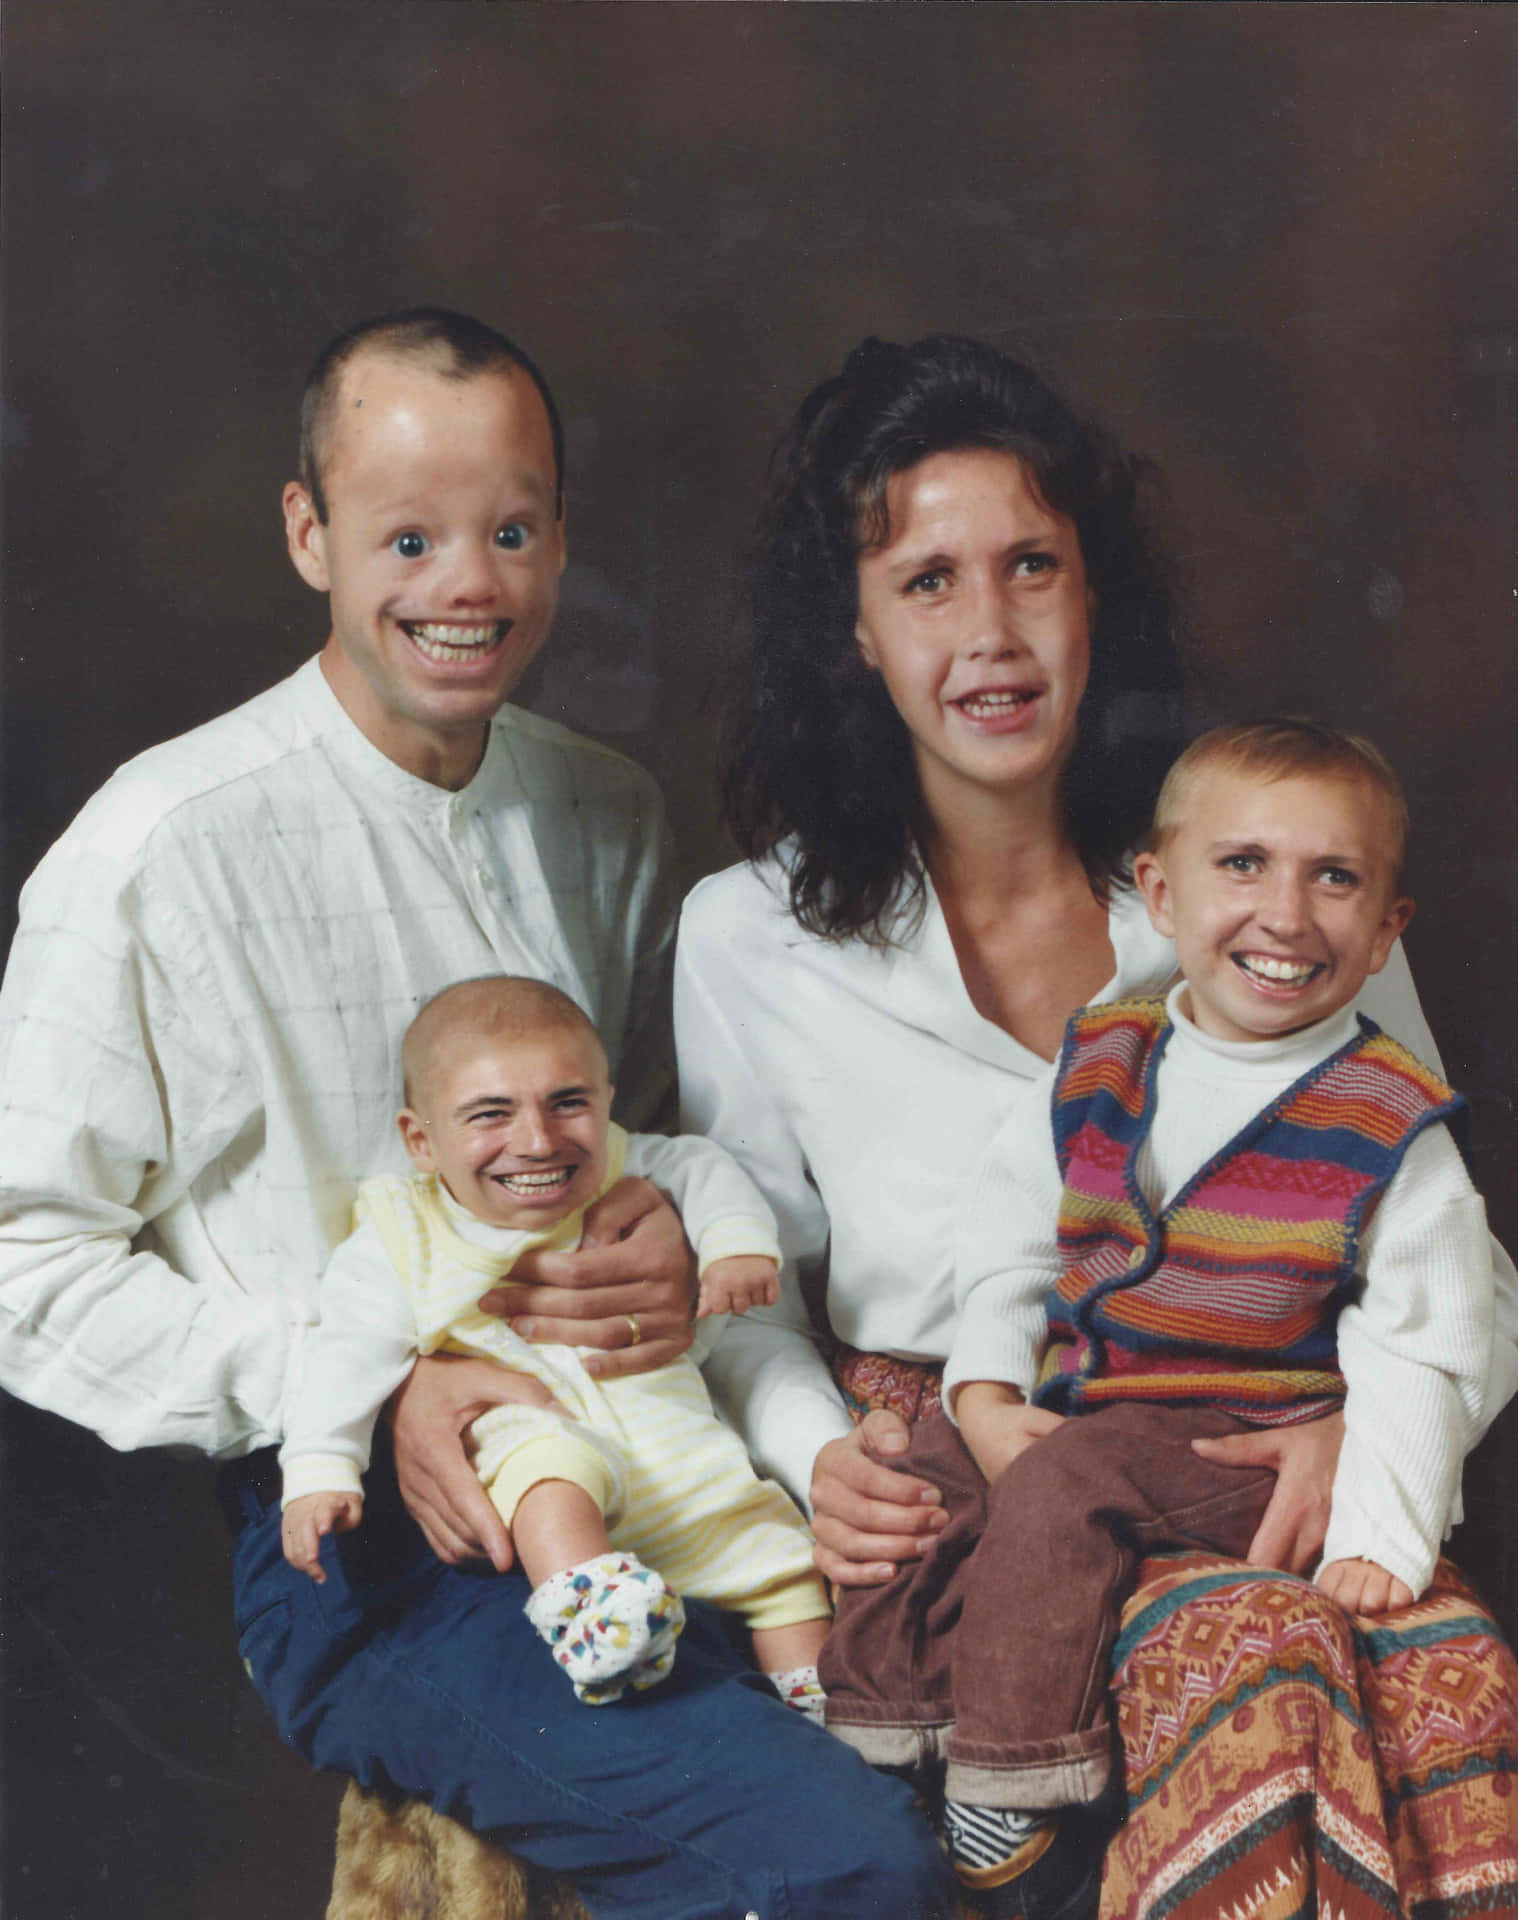 Bad Family Photos: 15 more of the Awkwardly Funny | Team Jimmy Joe